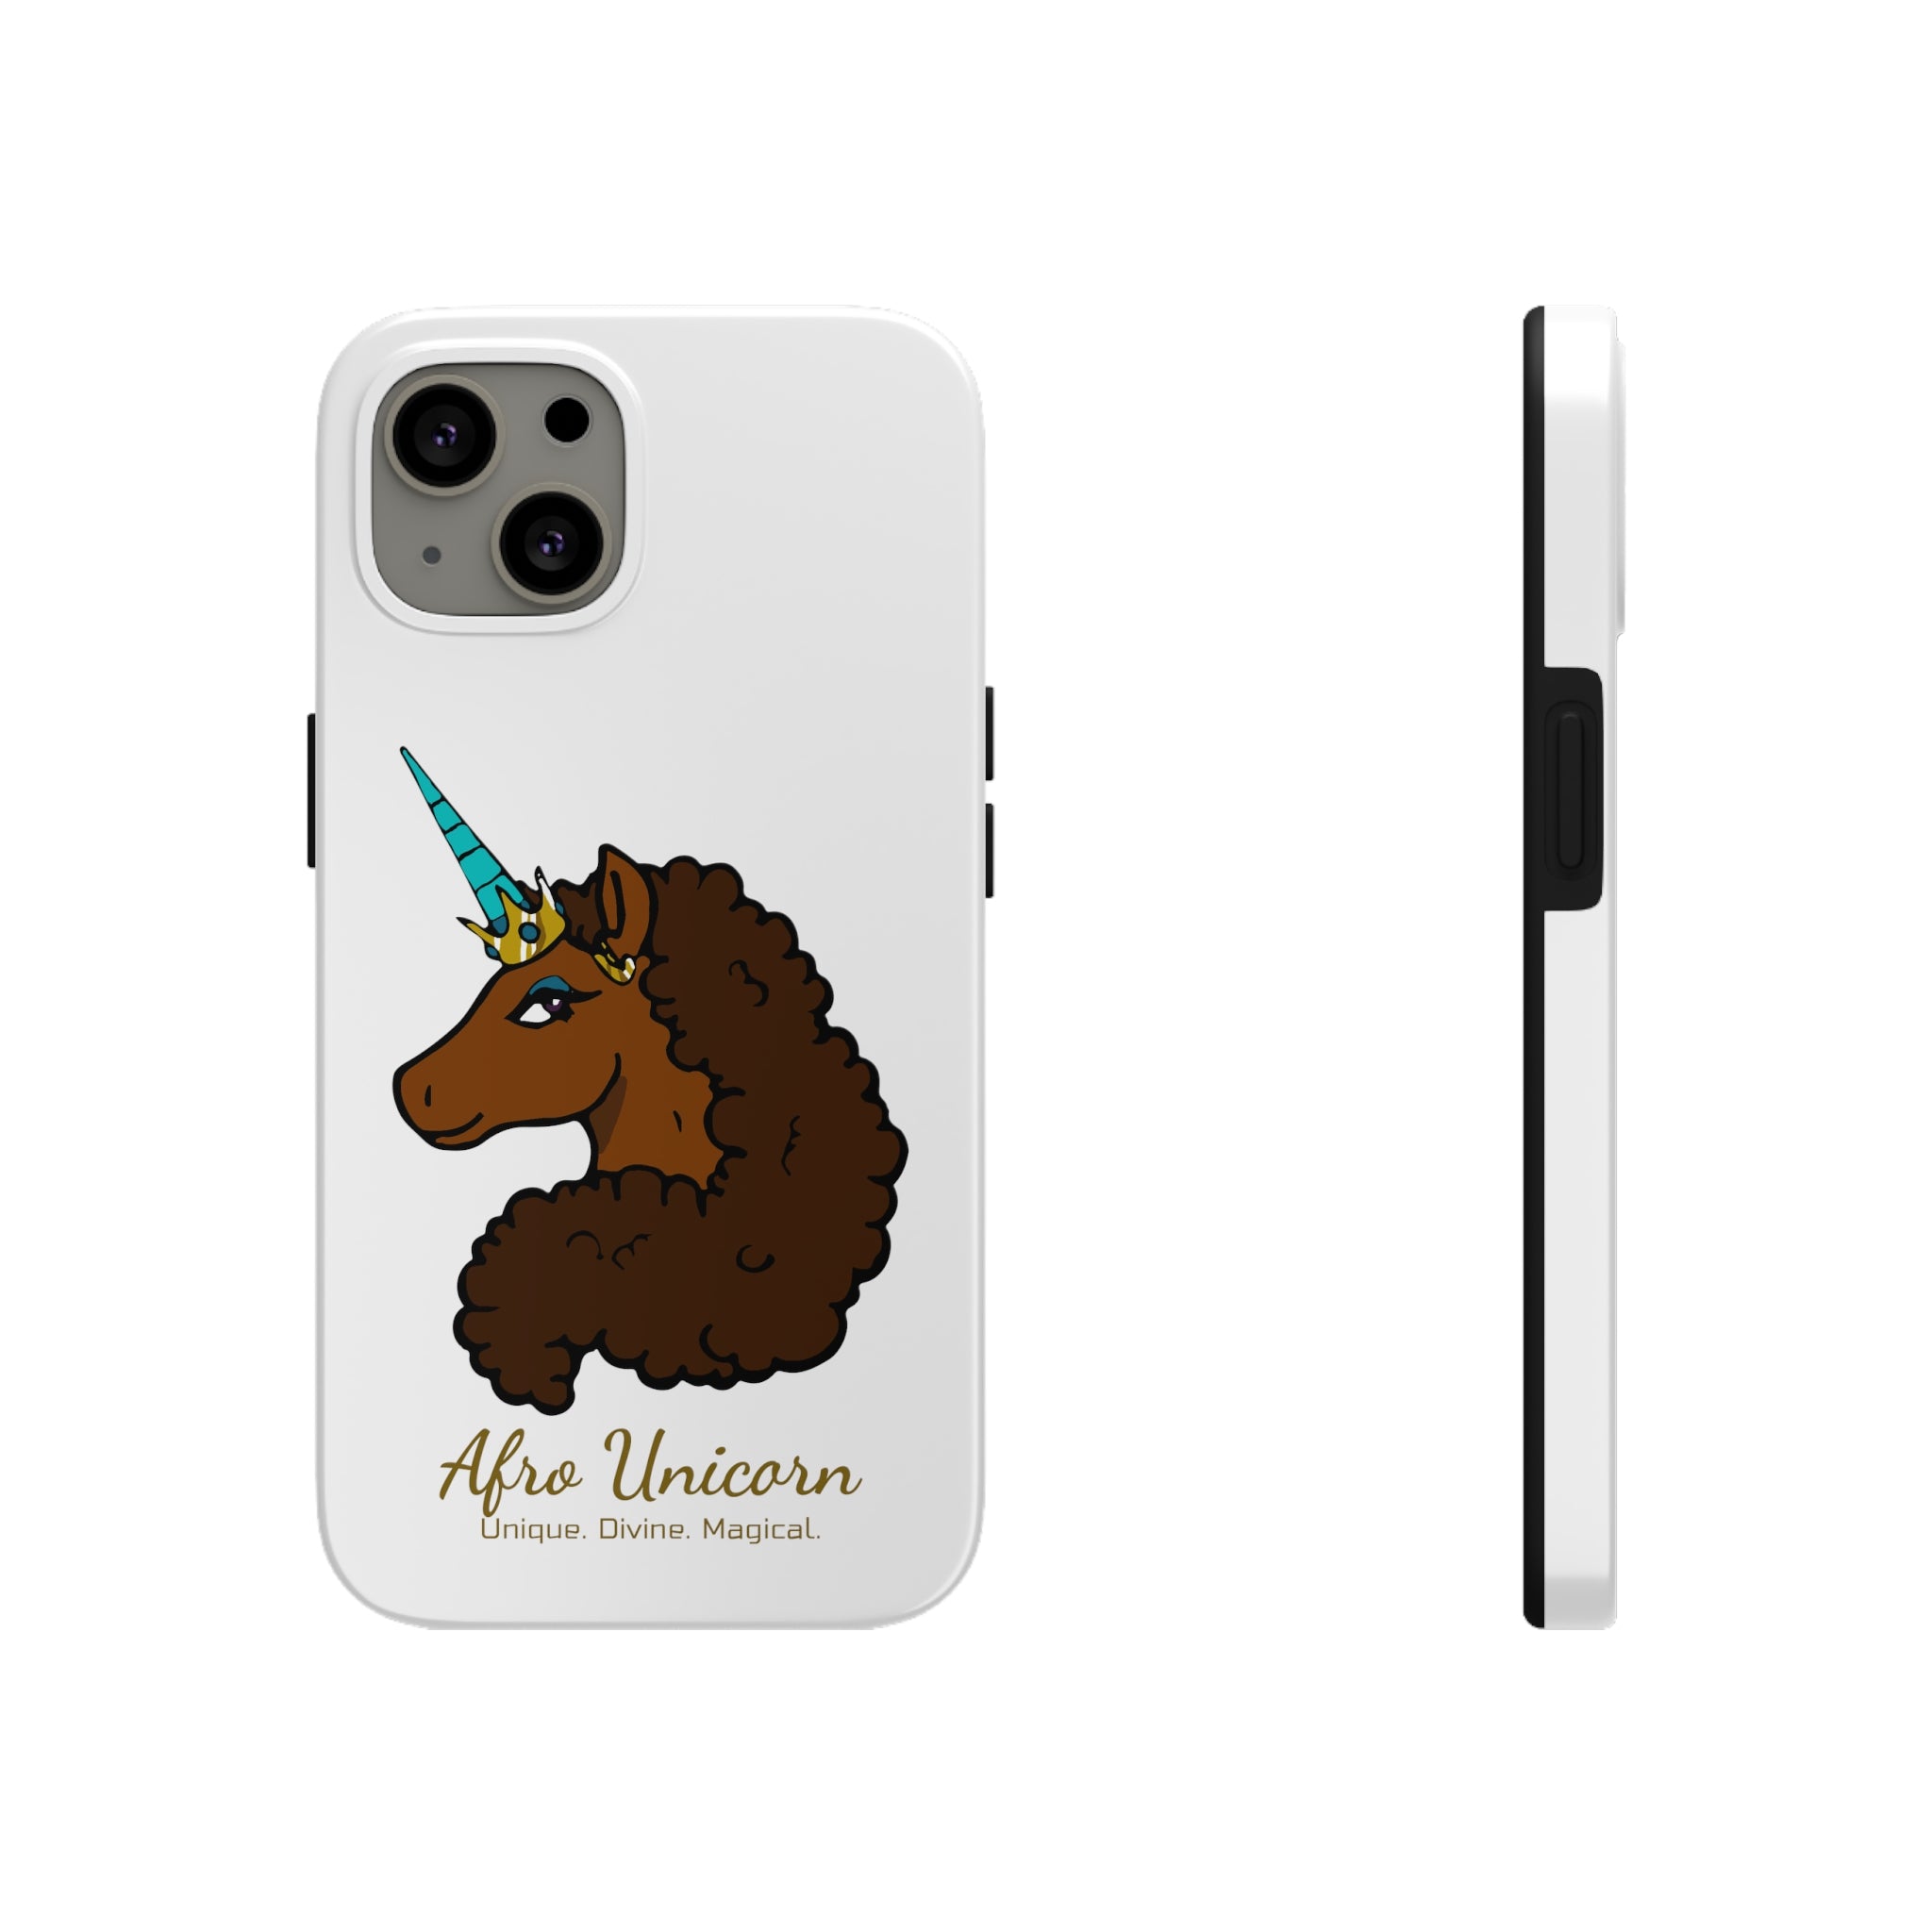 Afro Unicorn Tough Phone Cases - Caramel